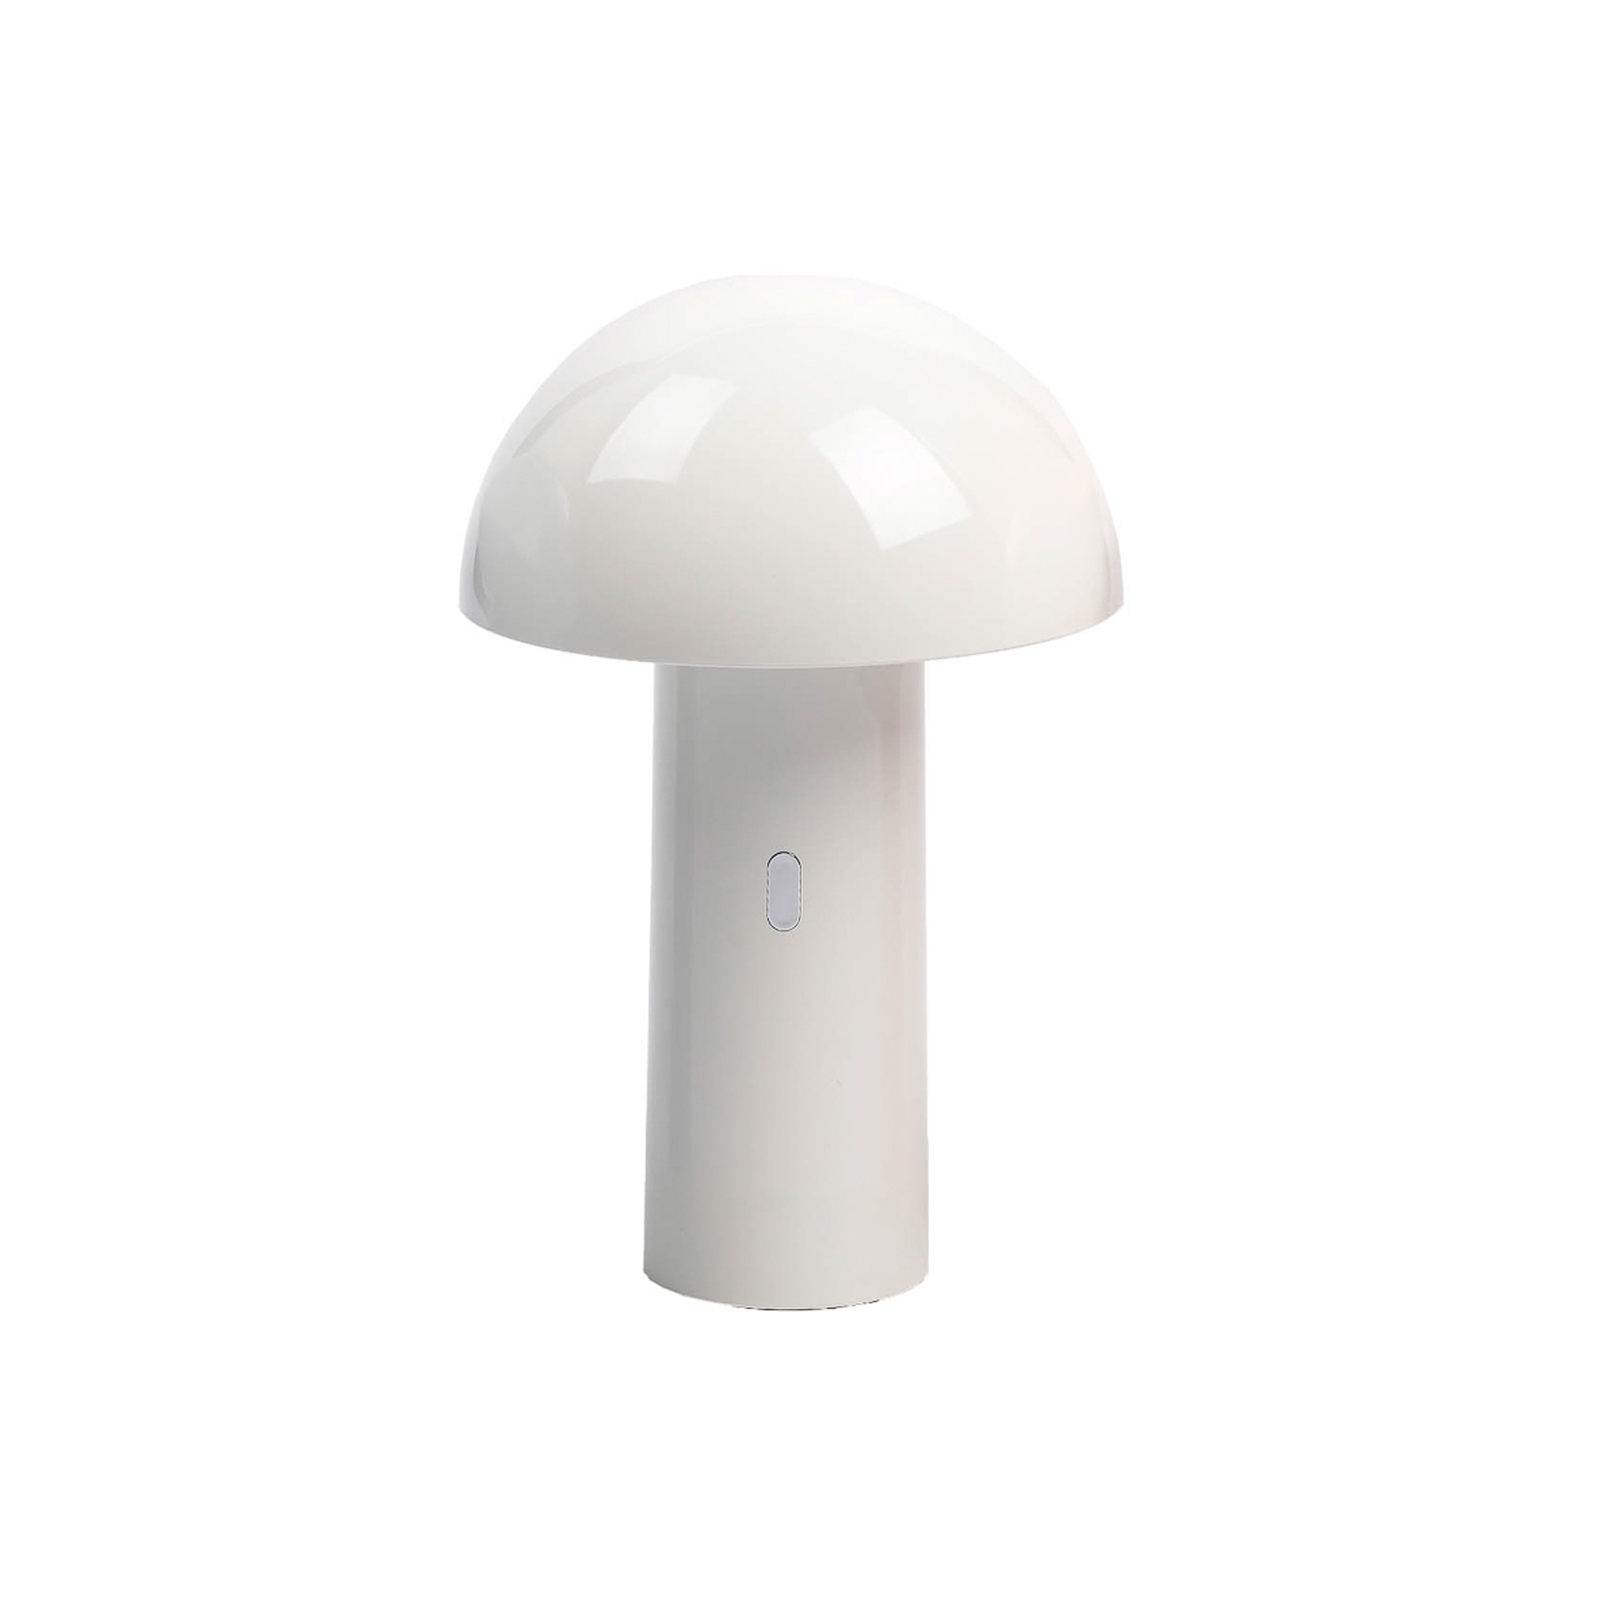 Aluminor Capsule lampa stołowa LED przenośna biała